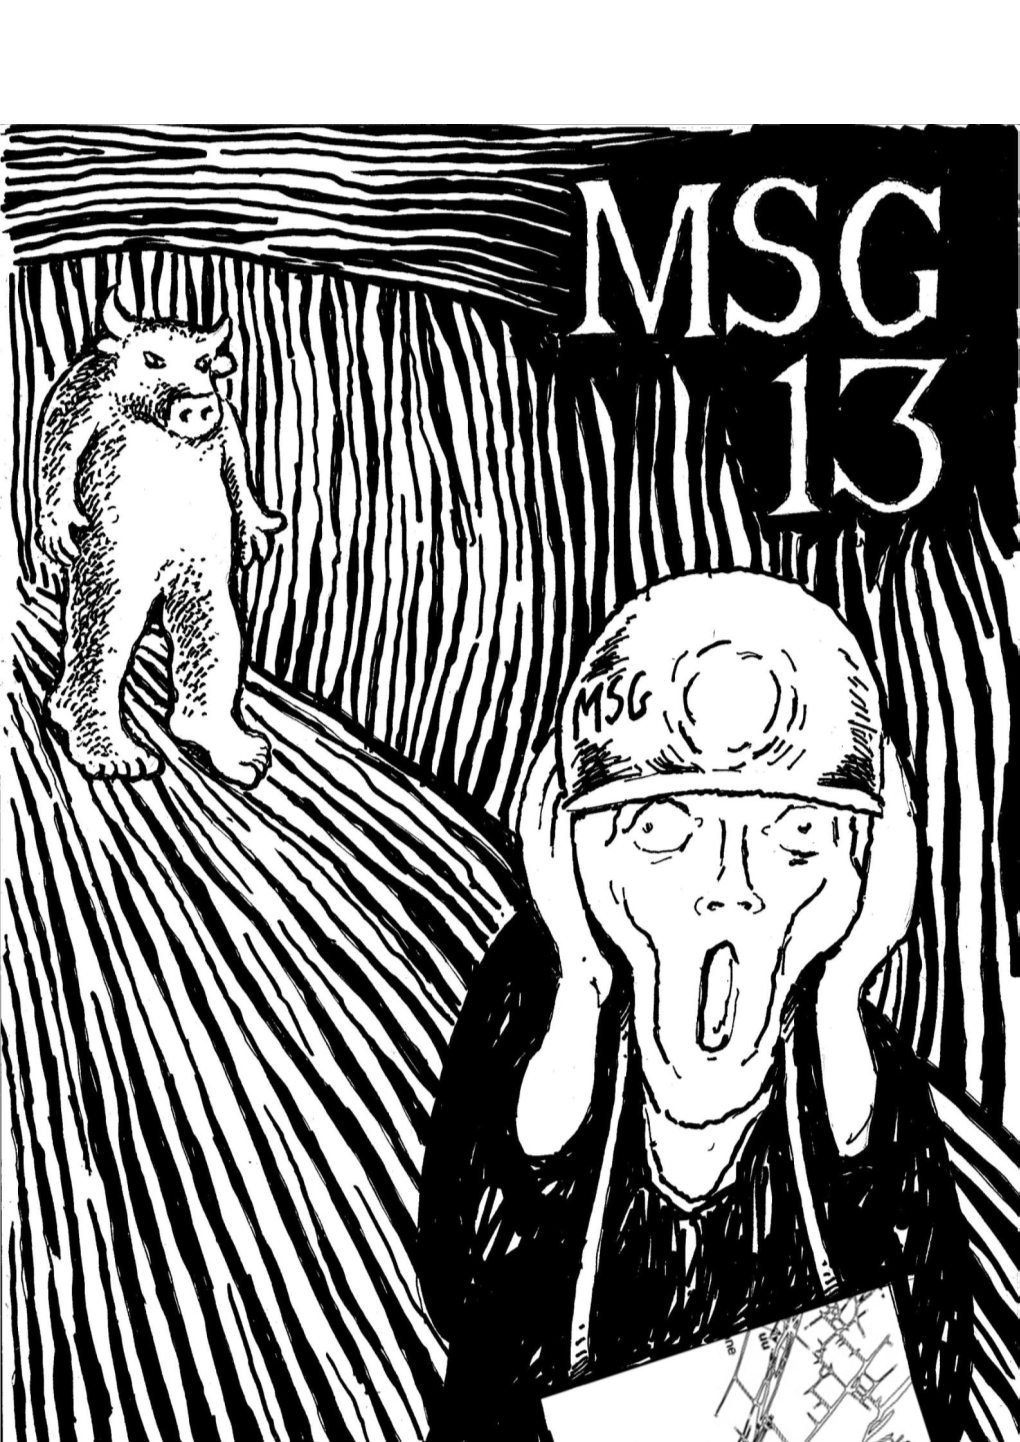 Msg13 the Thirteeth Journal of the Moldywarps Speleological Group August 2015